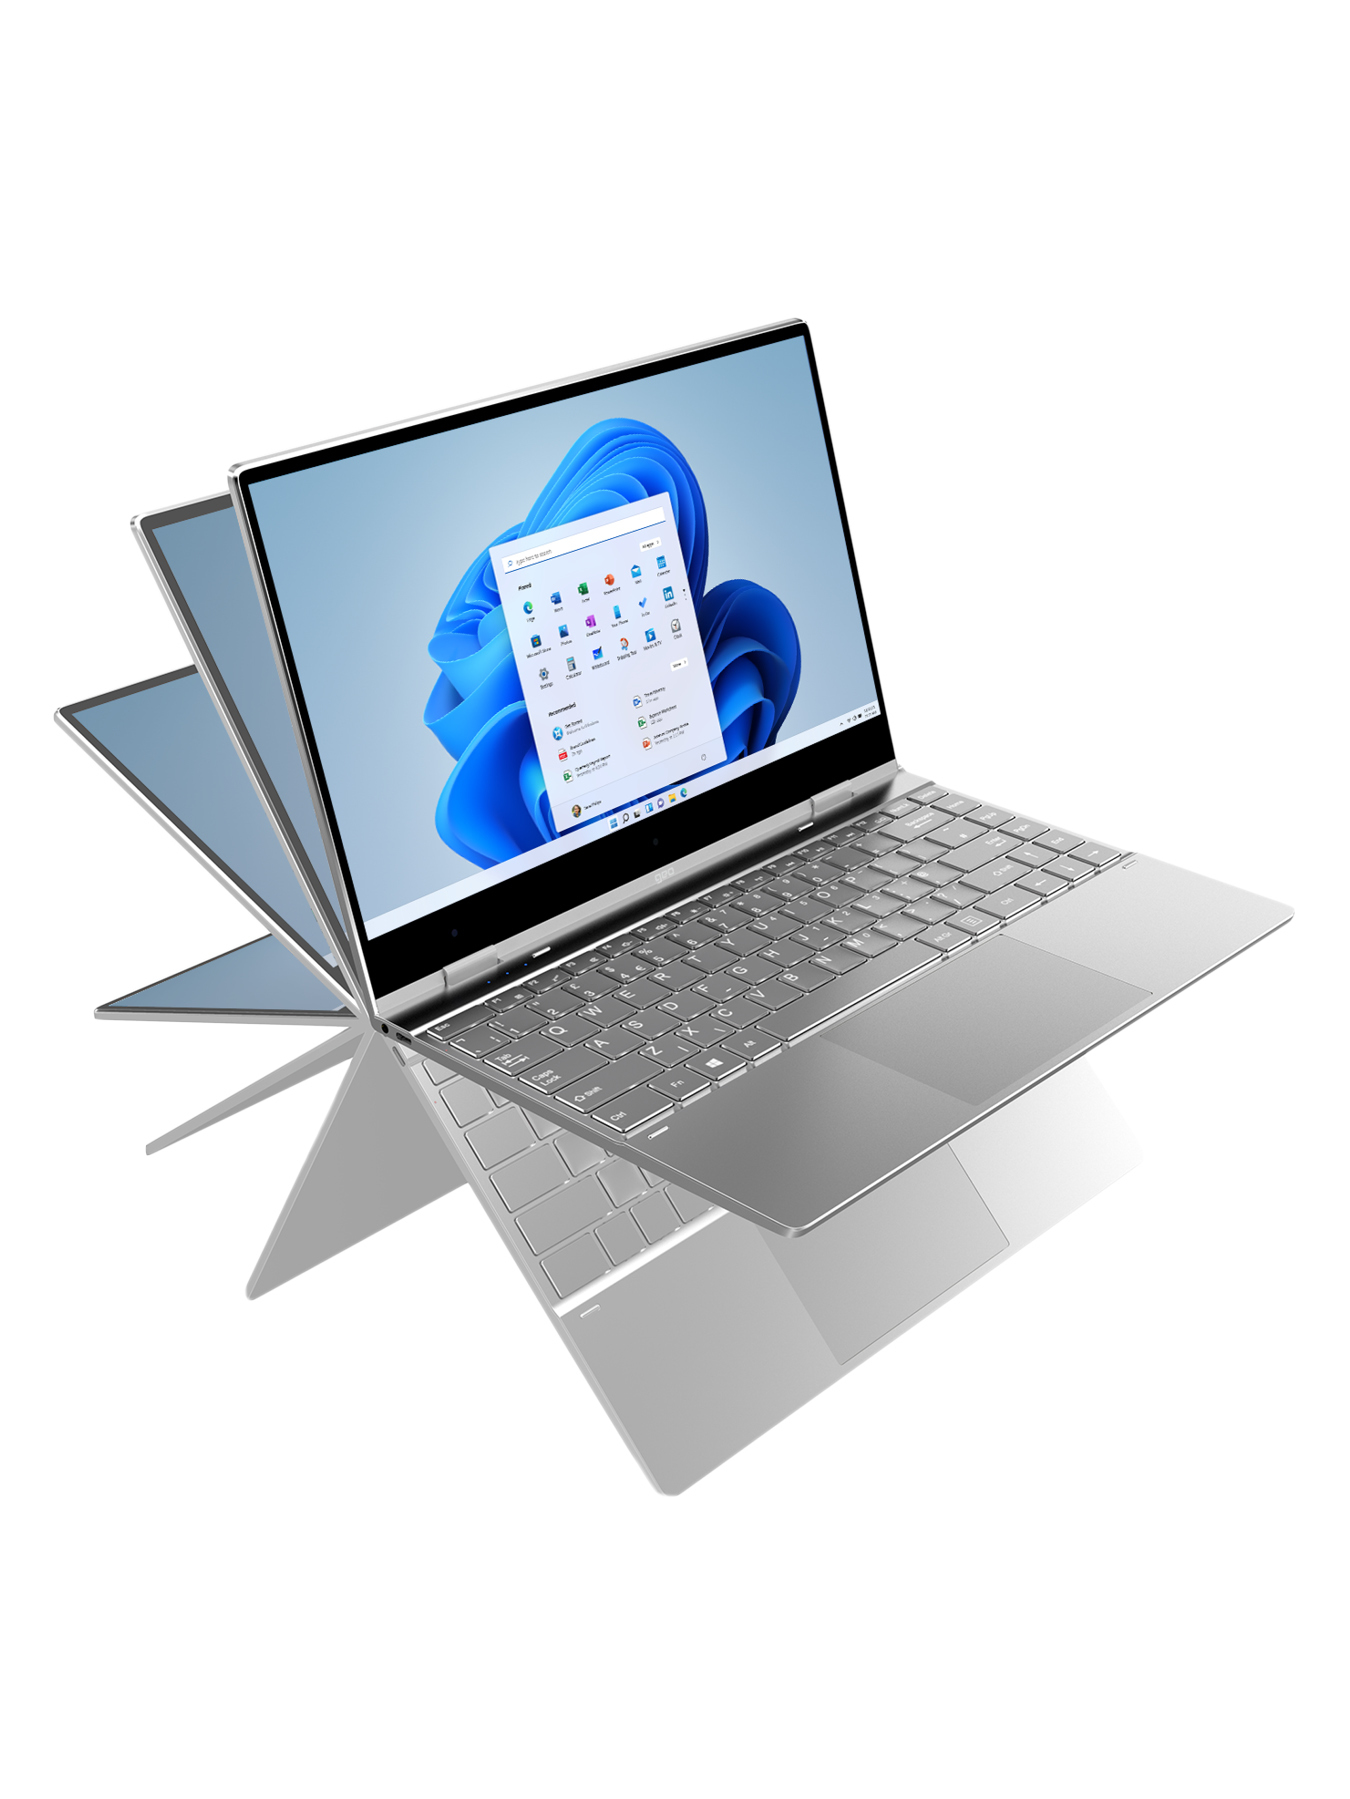 GeoFlex 340 14.1-inch Convertible Laptop with Touchscreen Windows 10 Intel Core i3 4GB RAM 128GB SSD